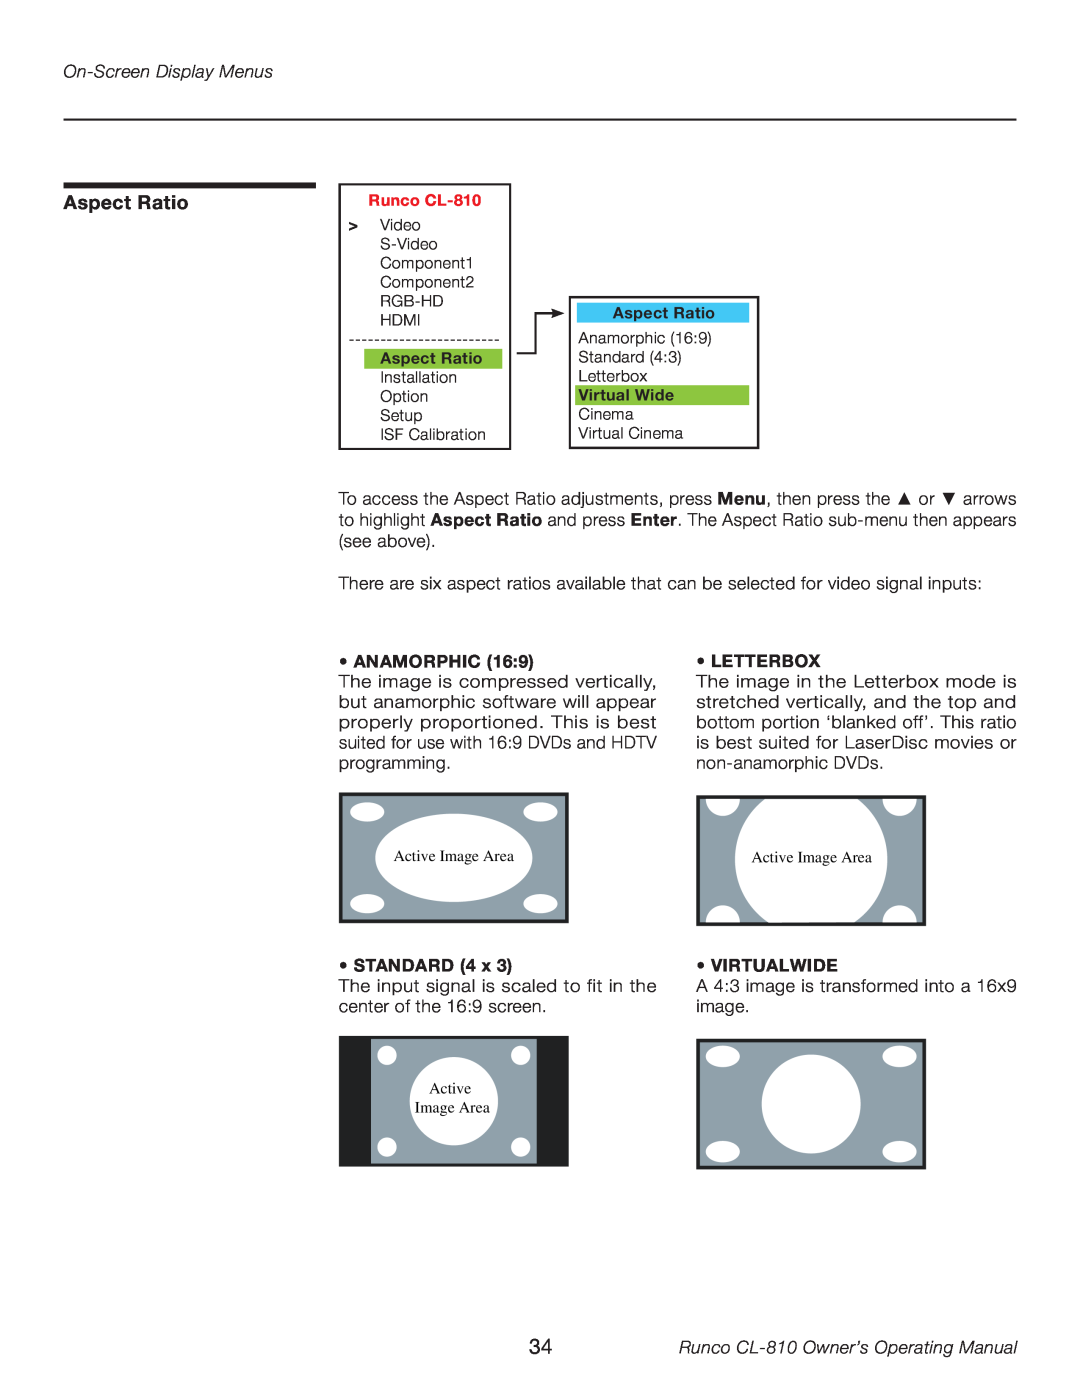 Runco CL-810 manual Aspect Ratio, On-Screen Display Menus, Anamorphic, Letterbox, STANDARD 4 x, Virtualwide 